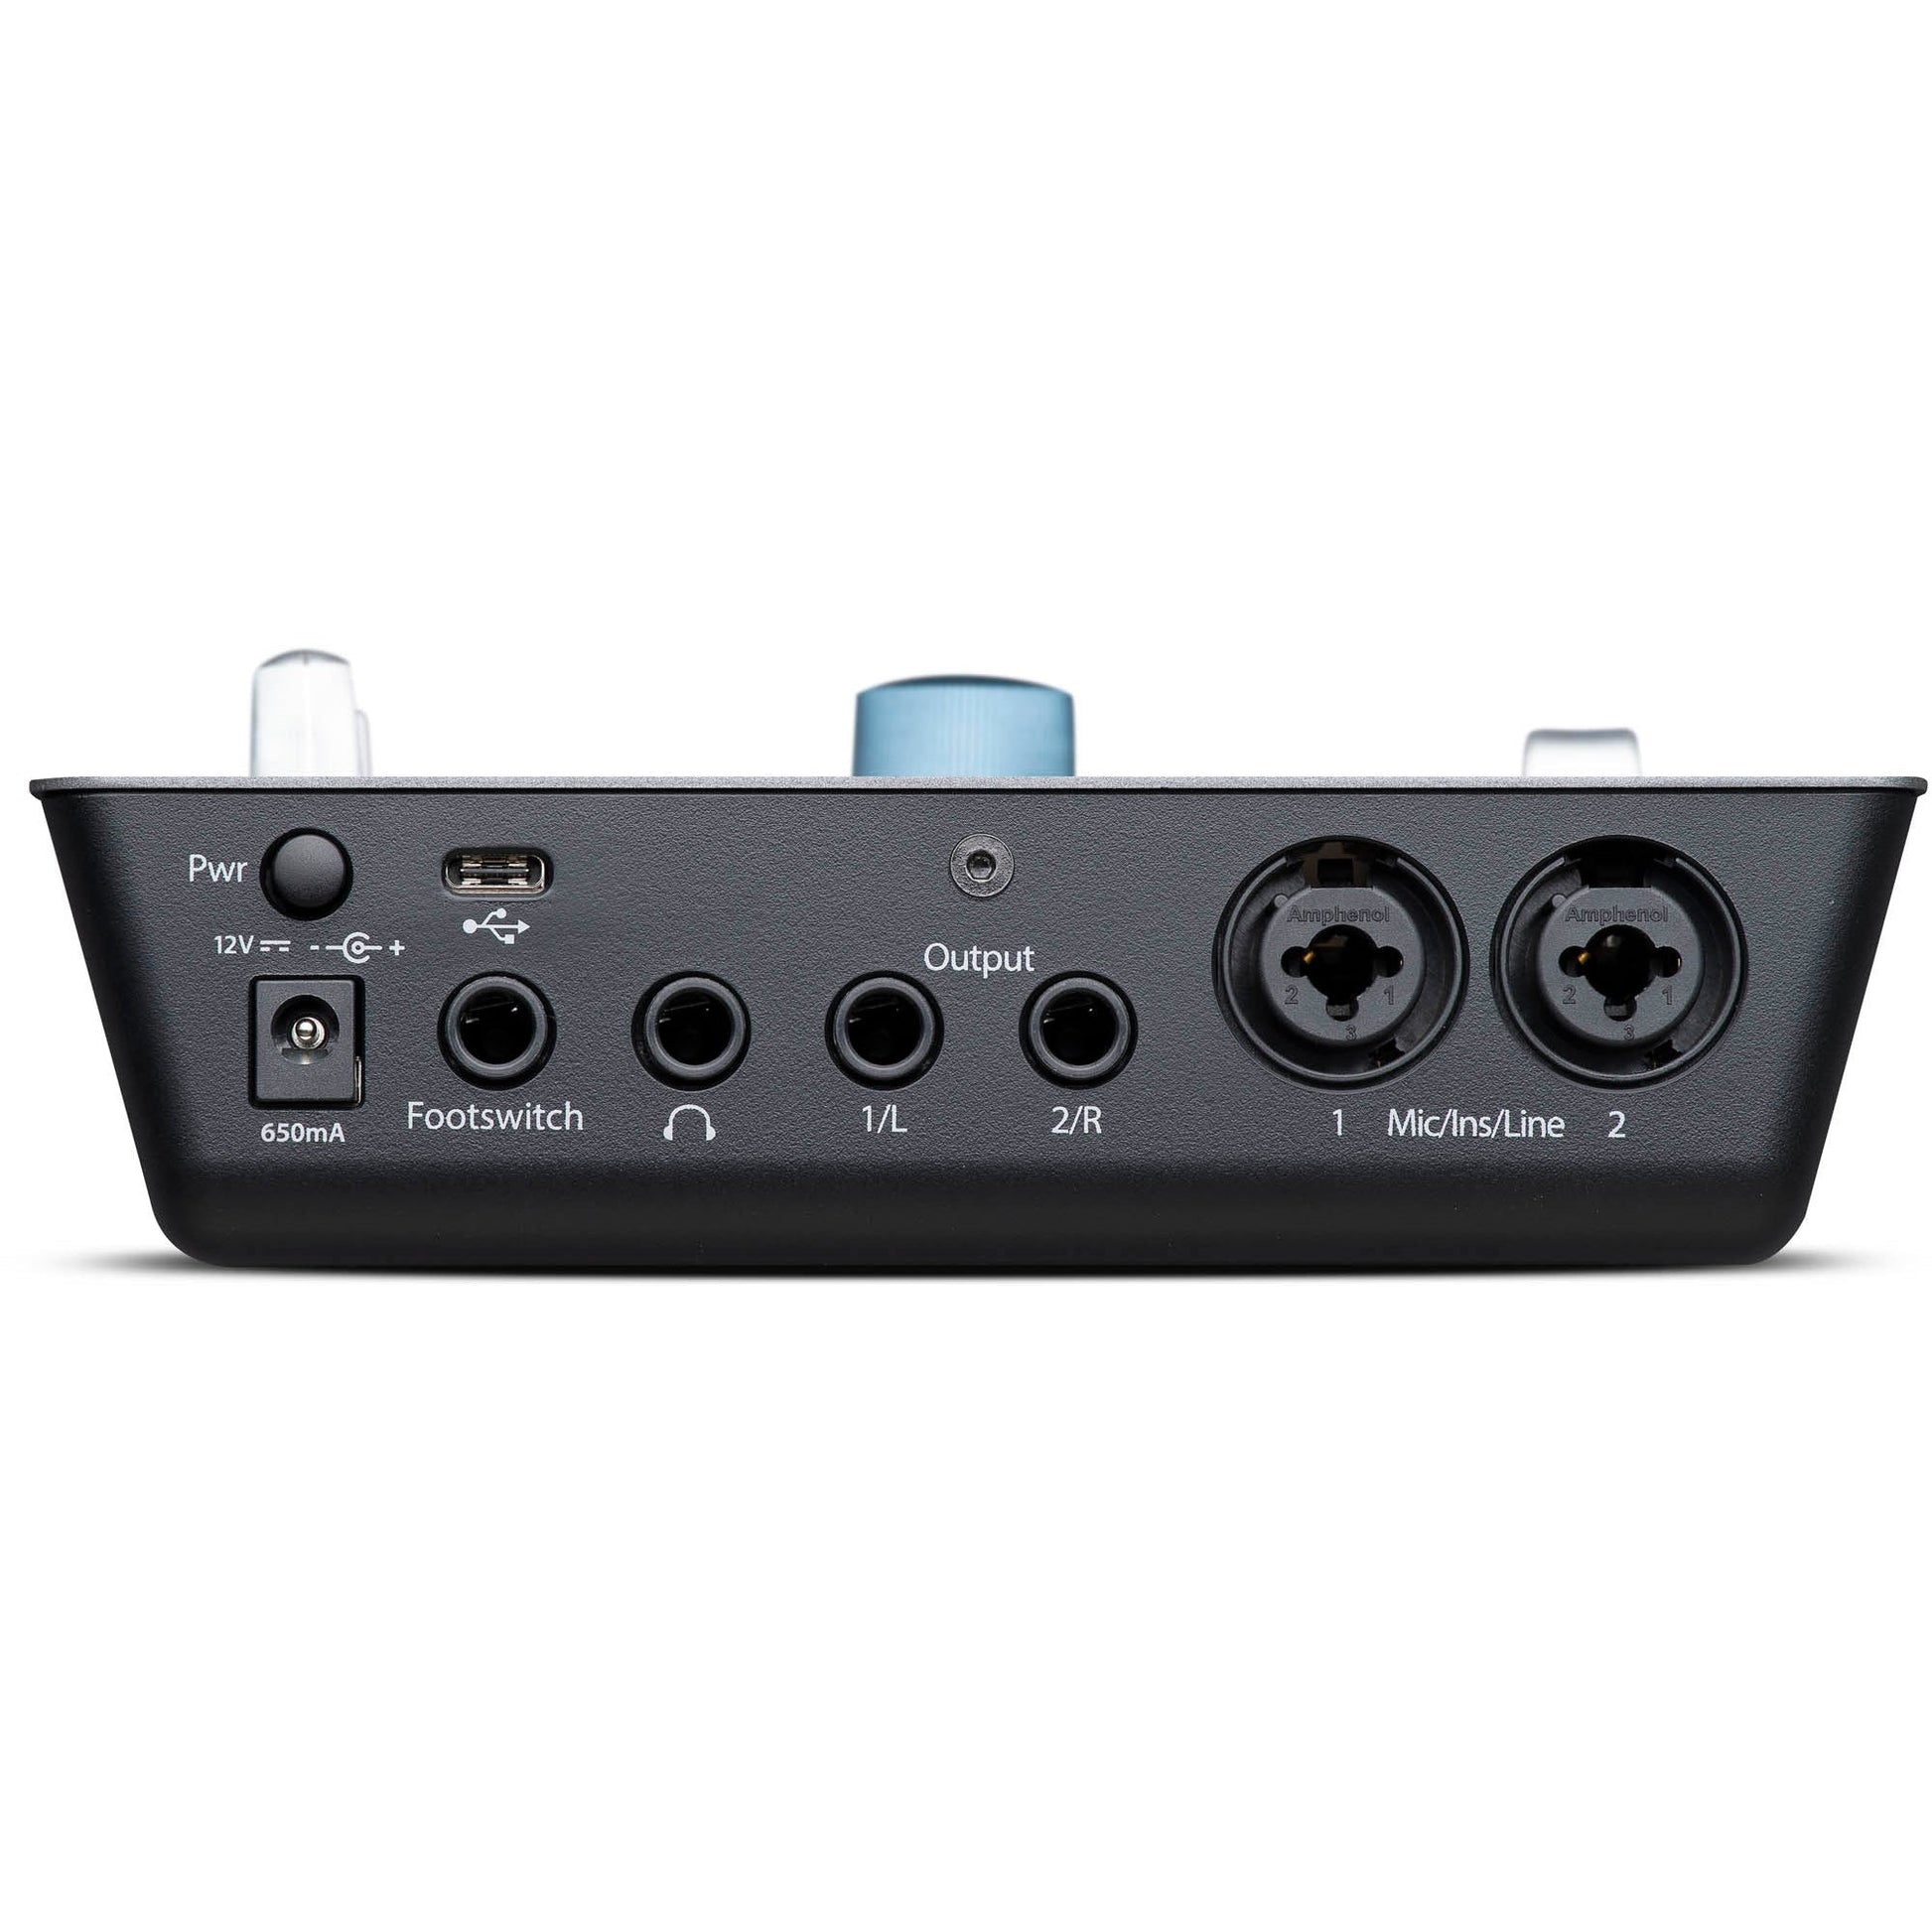 PreSonus ioSTATION 24c 2x2 USB-C Audio Interface and Production Controller - Leitz Music-673454008672-IOSTATION24C